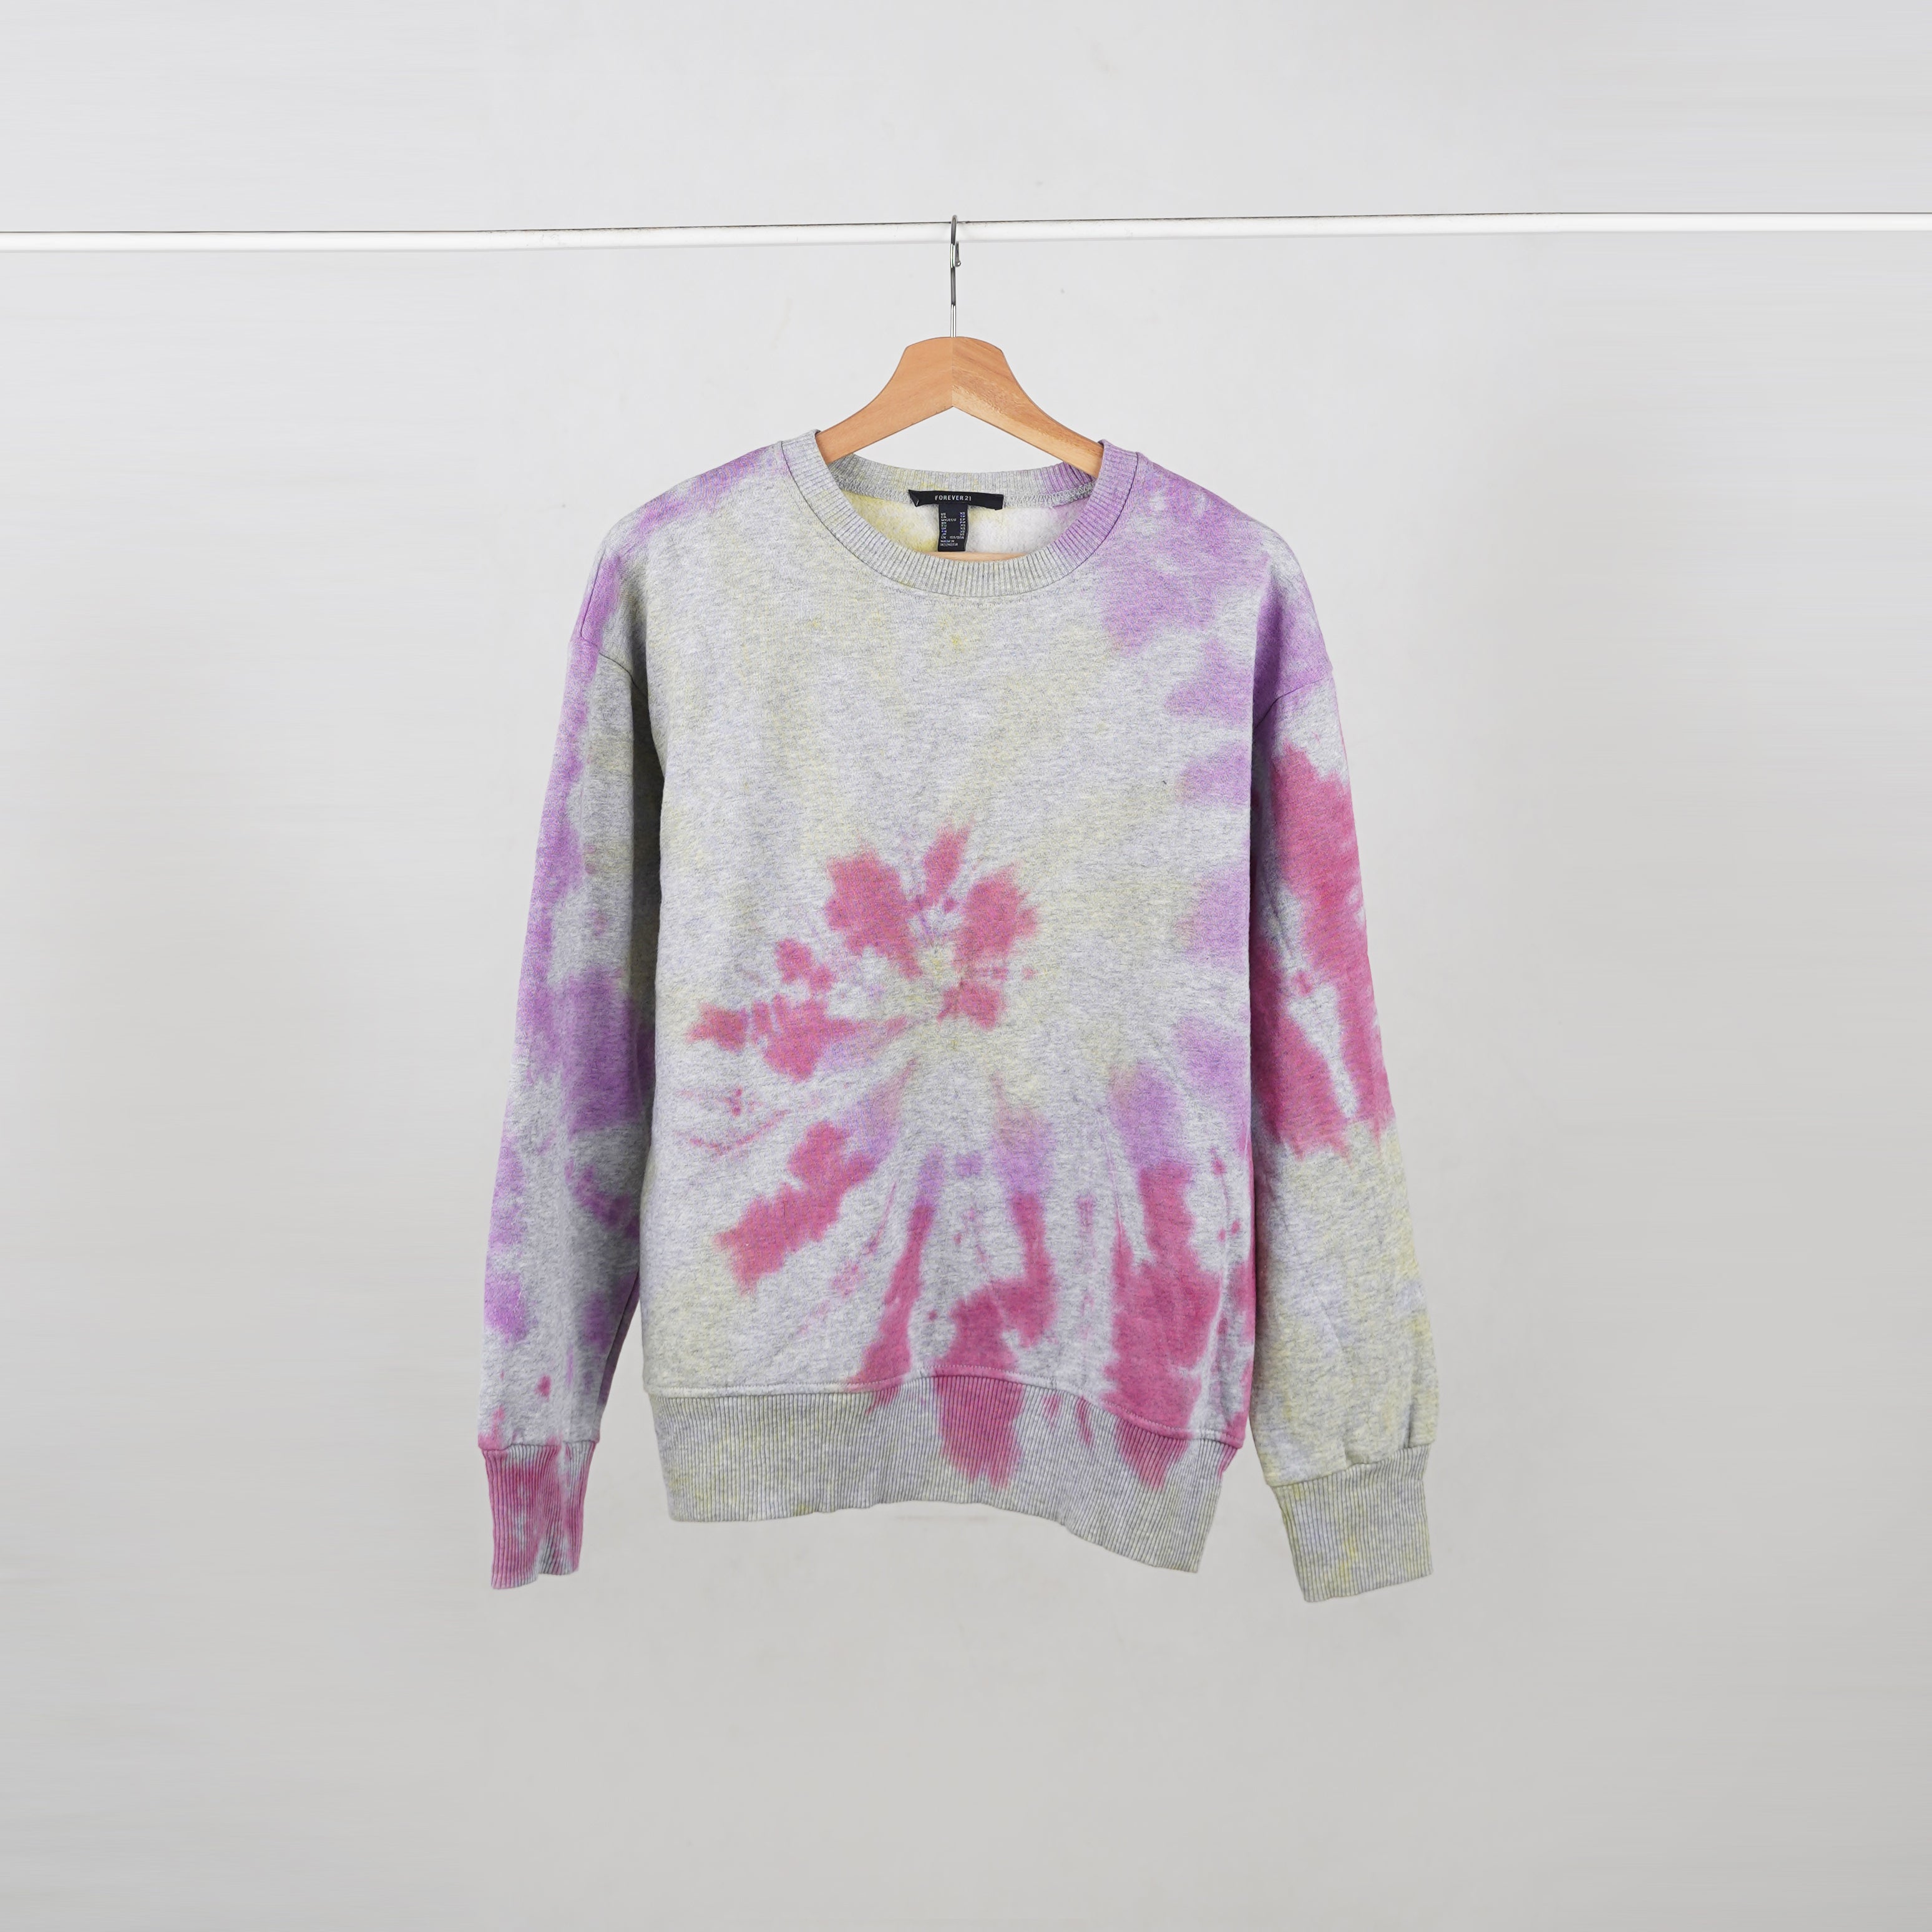 Sweatshirt Wanita - Fzi Tie Dye Sweatshirt Washed Grey (FSW 01)